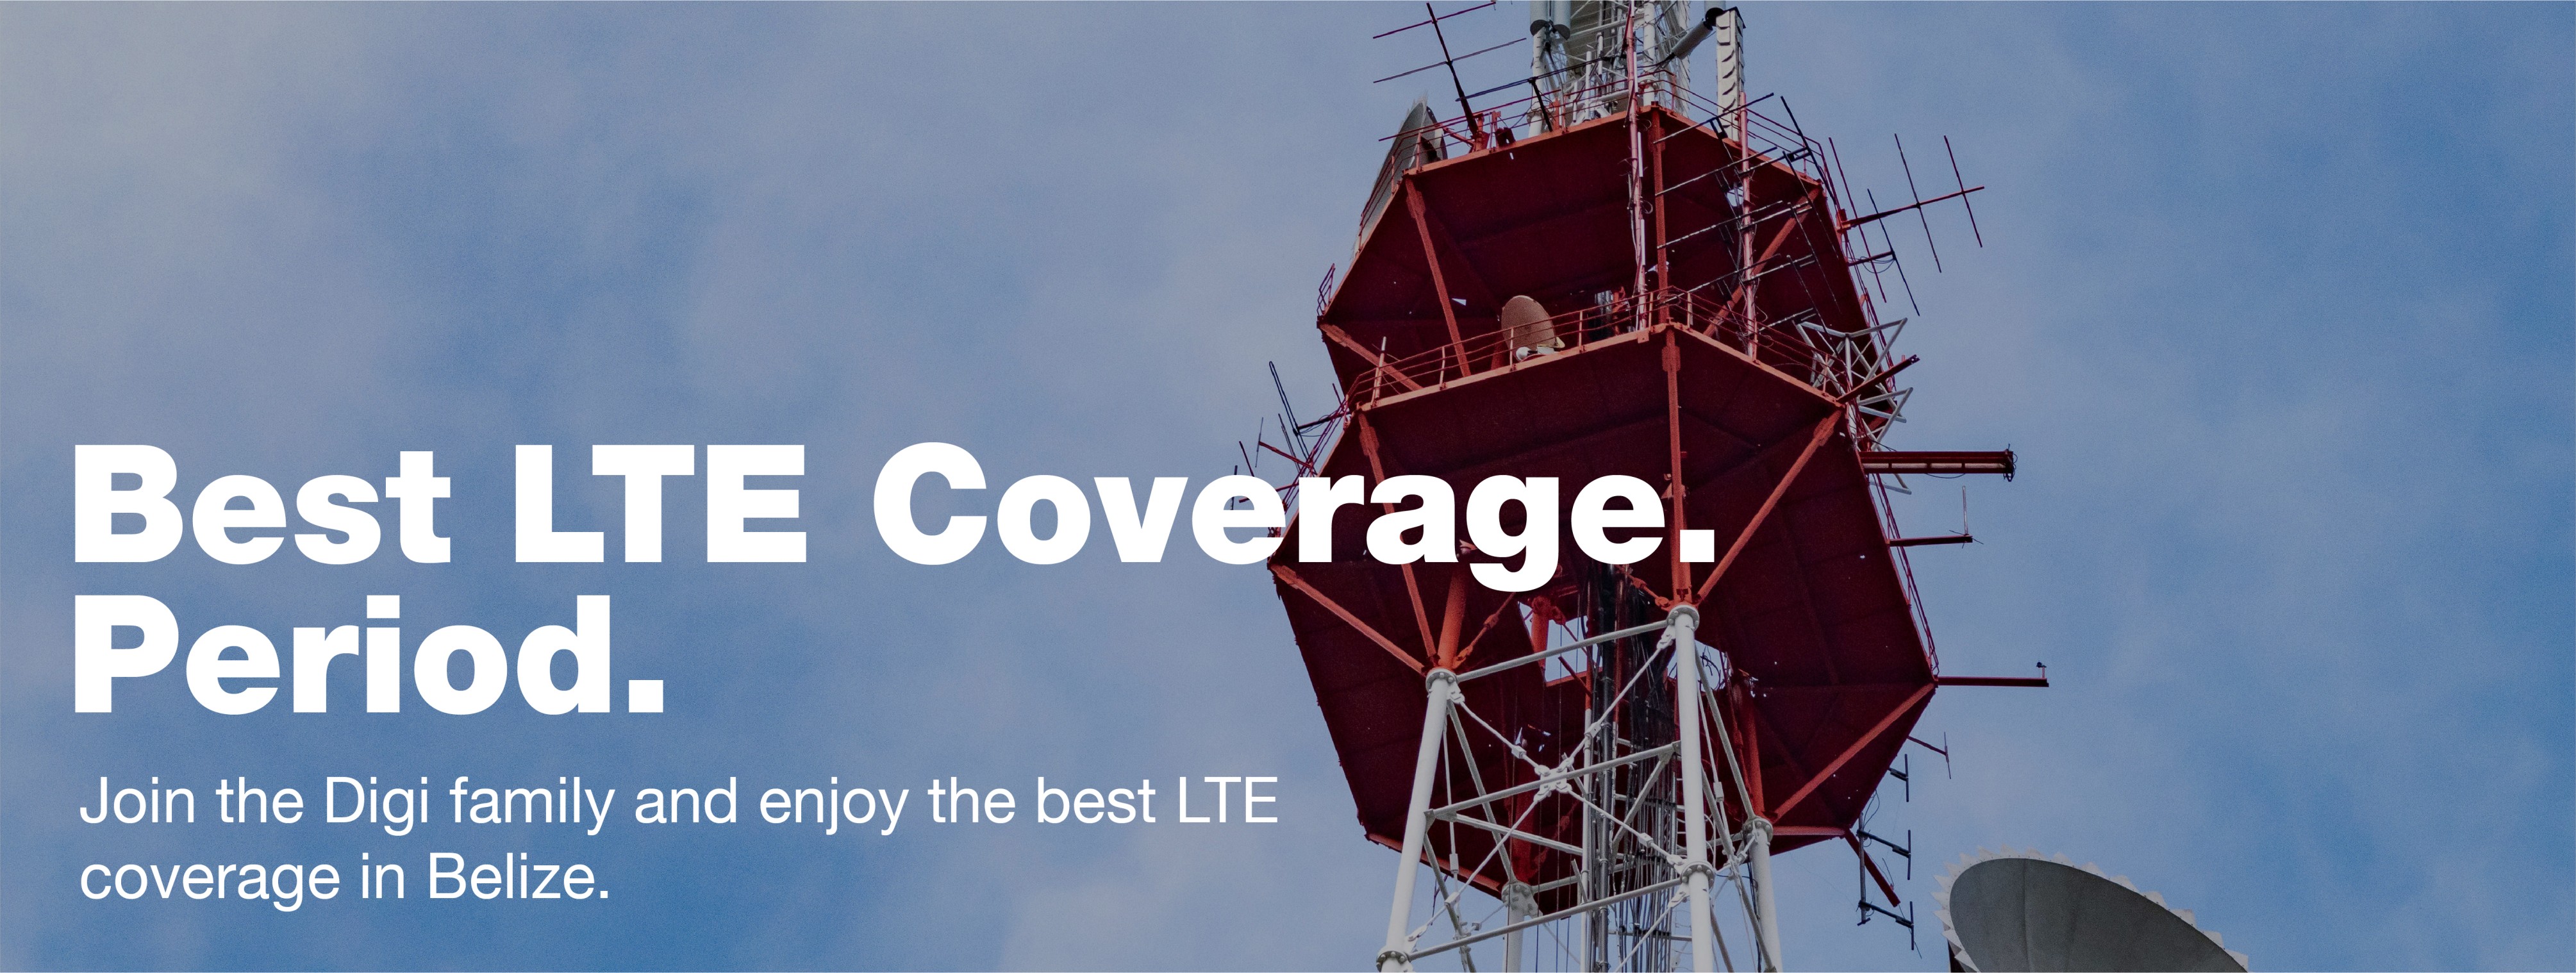 Best LTE Coverage